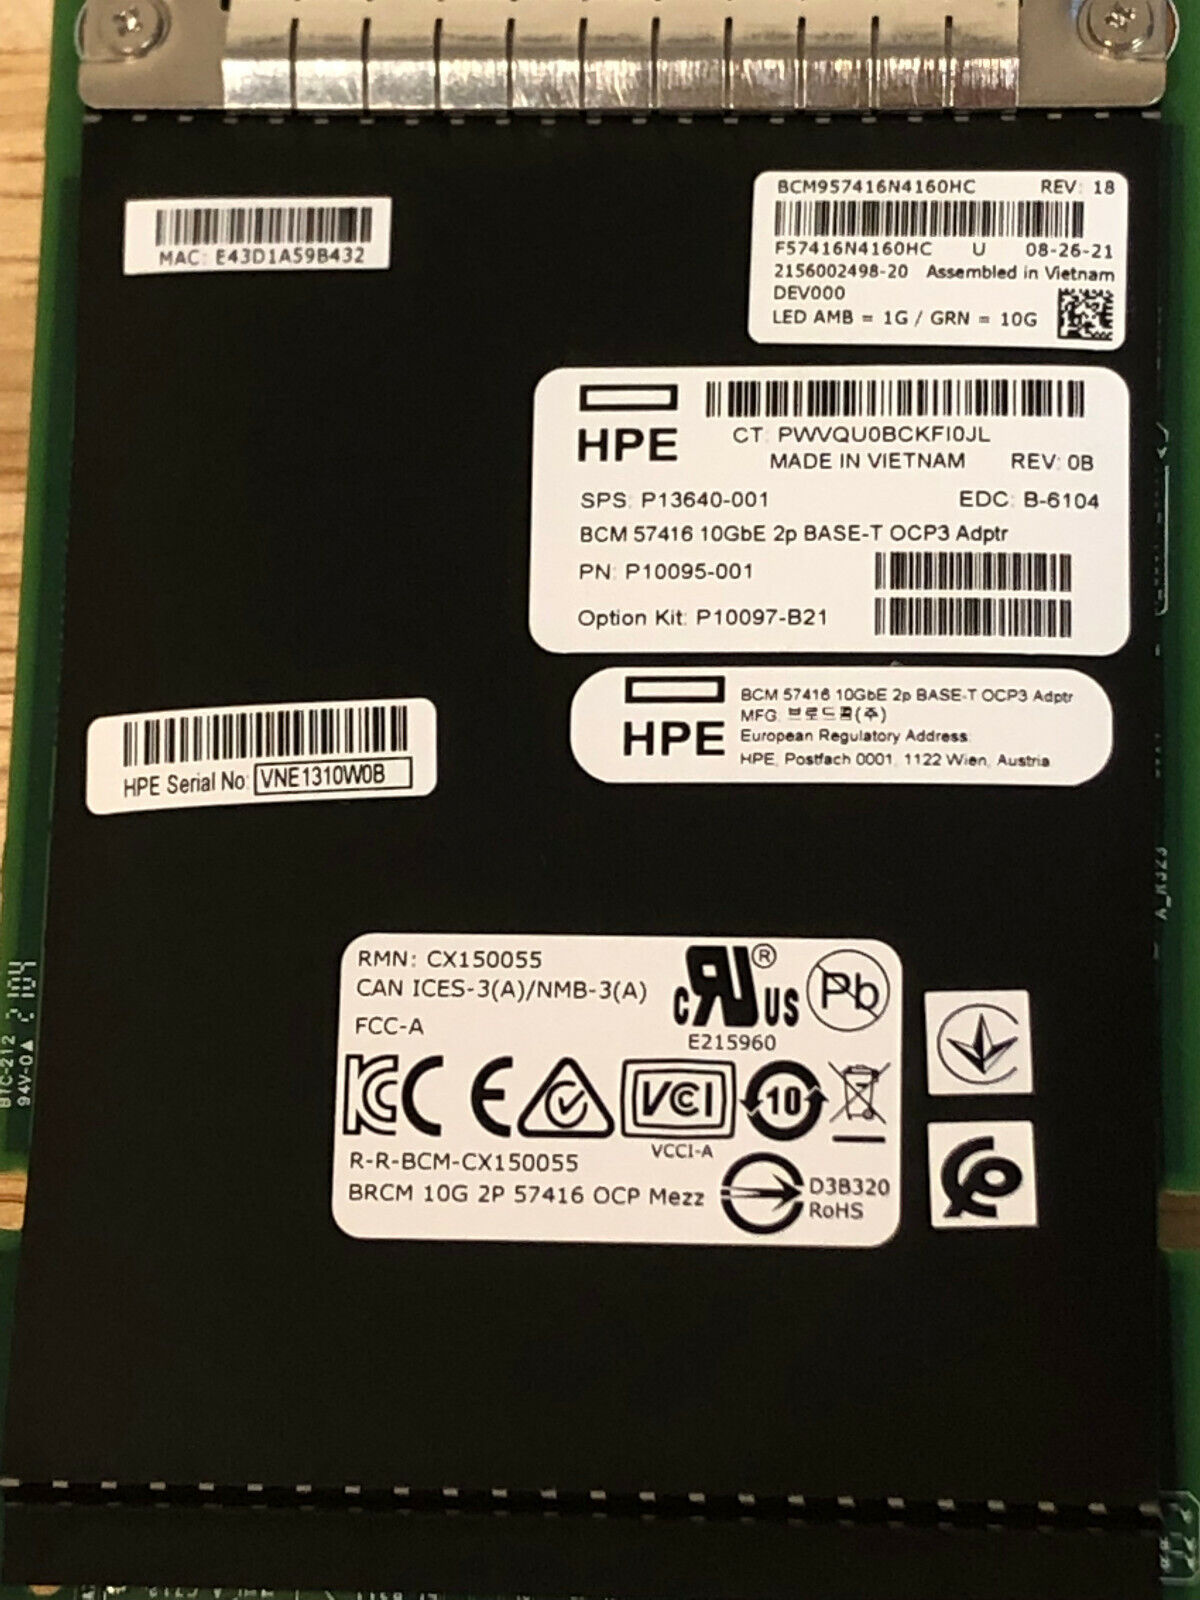 HPE P10097-B21 Broadcom 10Gb 2-port Ethernet BASE-T OCP3 Adapter Gen10 Plus and V2 P10095-001 P13640-001 10GbE 2P Base-T Adptr 10Gigabit 10GbE 10G RJ45.